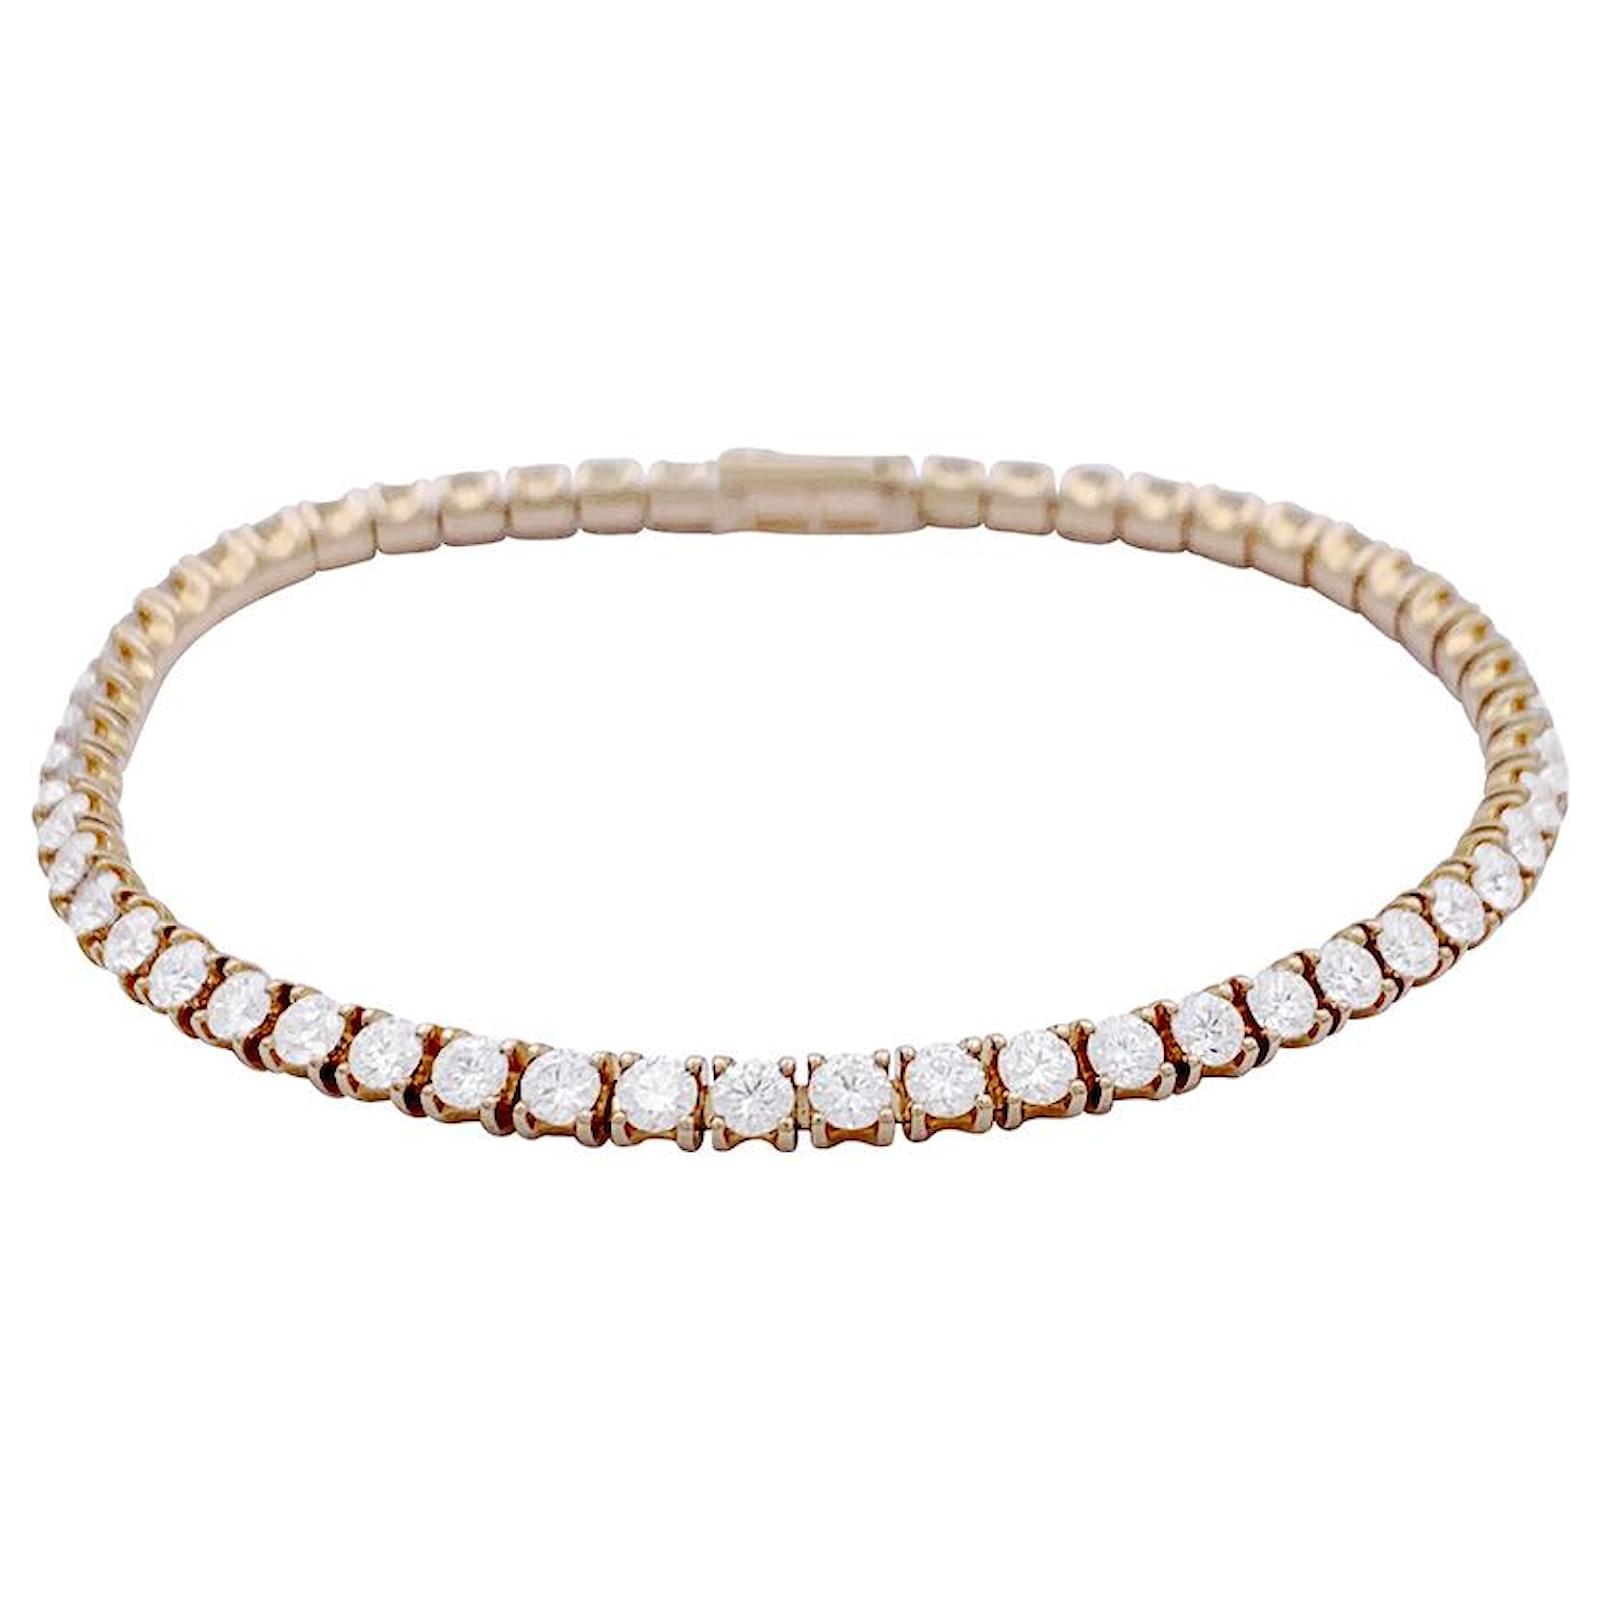 CRN6703317 - C de Cartier bracelet - Rose gold, diamonds - Cartier